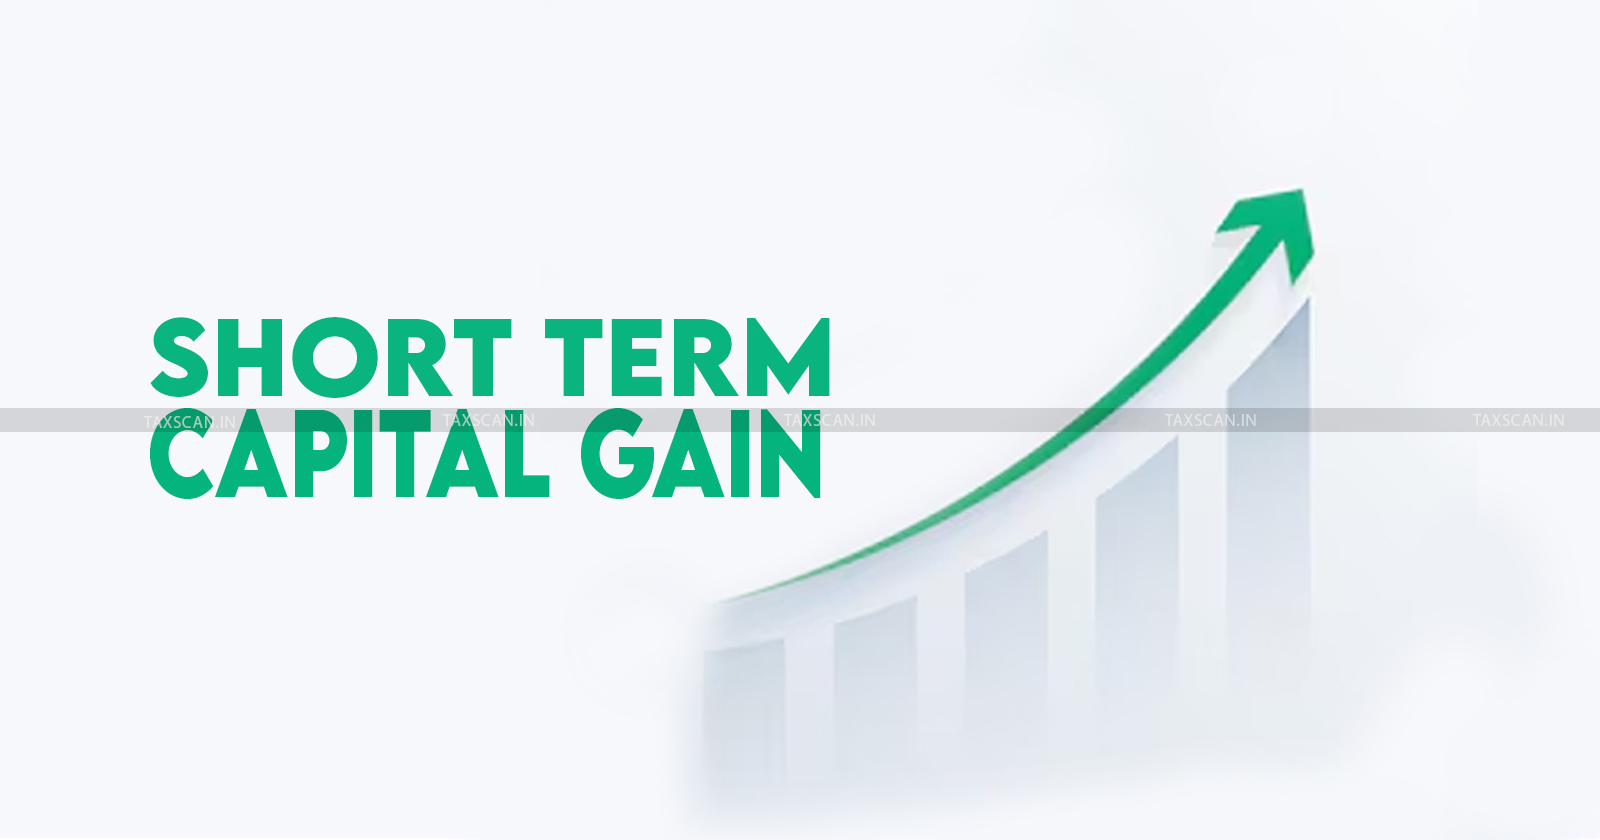 ITAT - Income tax - Tax rate disparity - Short term capital loss - Short term capital gain - taxscan